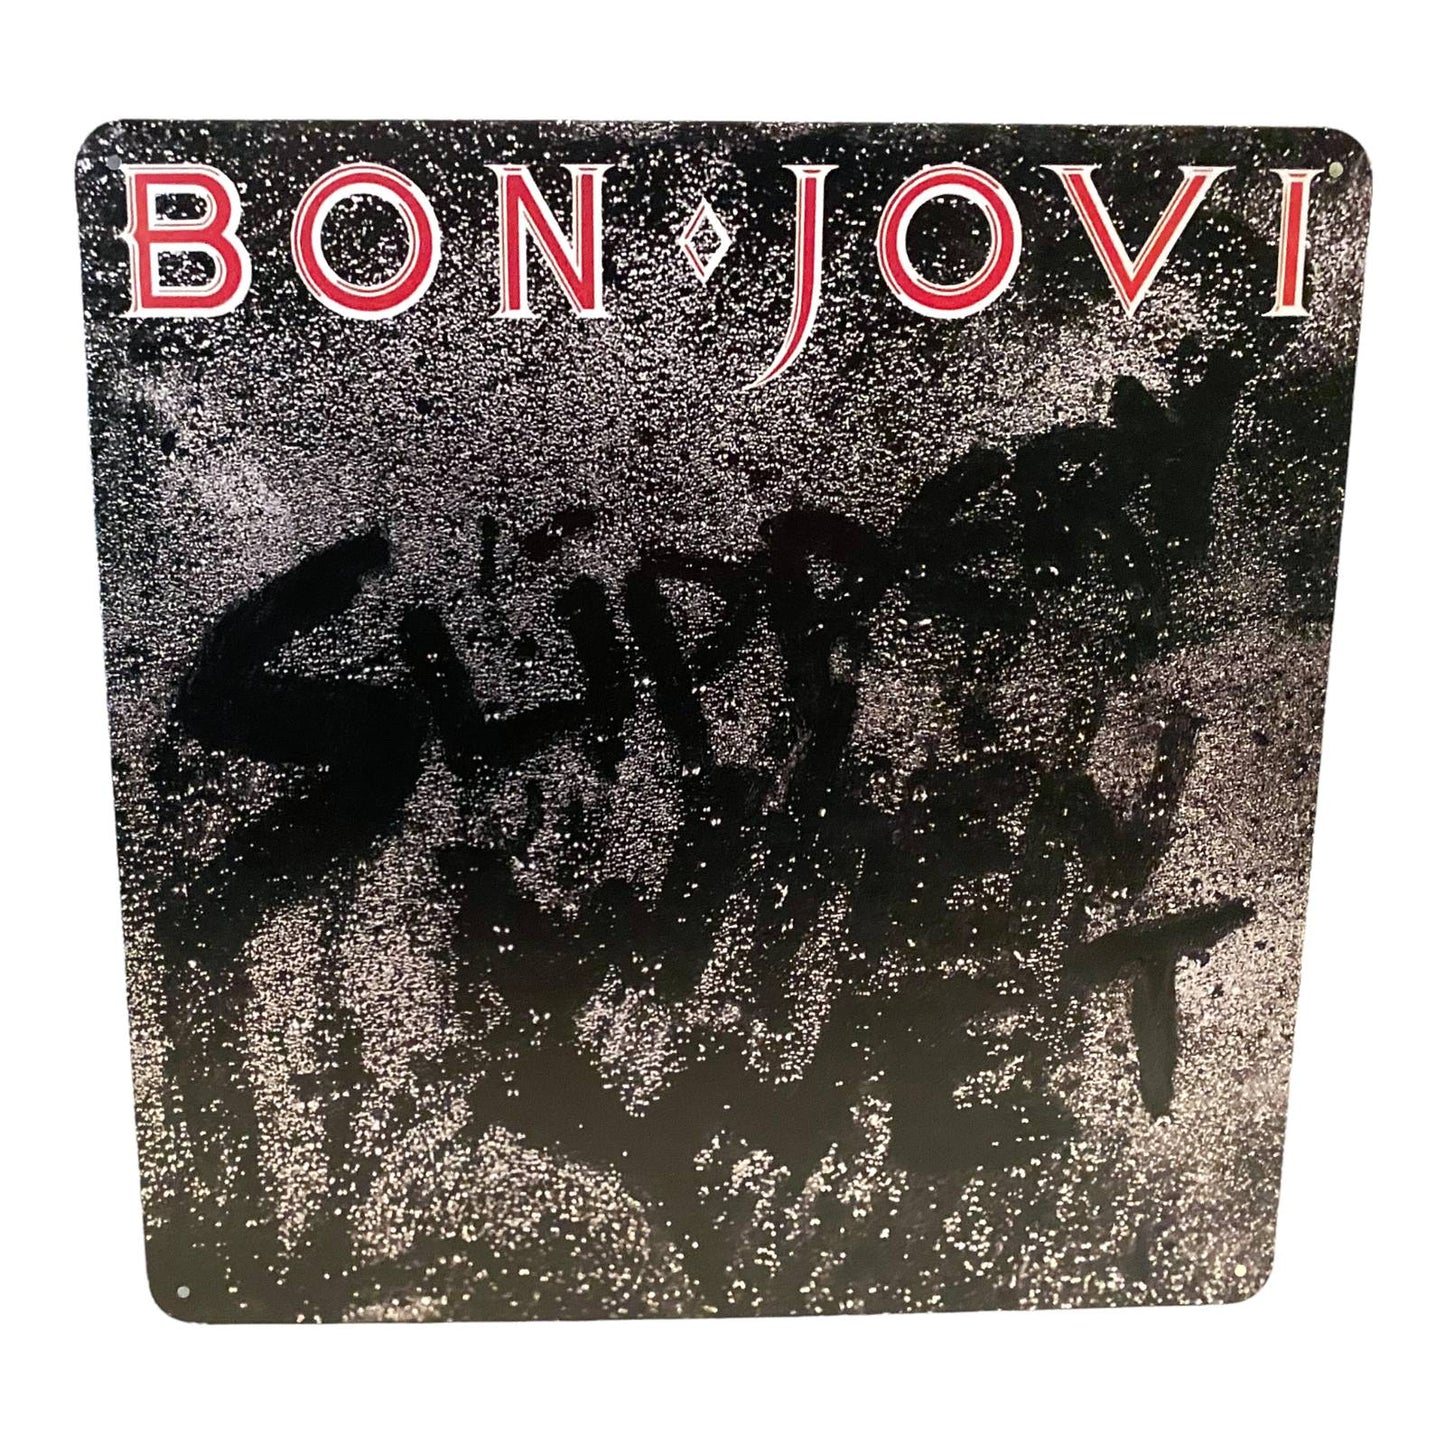 Bon Jovi - Slippery When Wet Album Cover Metal Print Tin Sign 12"x 12"